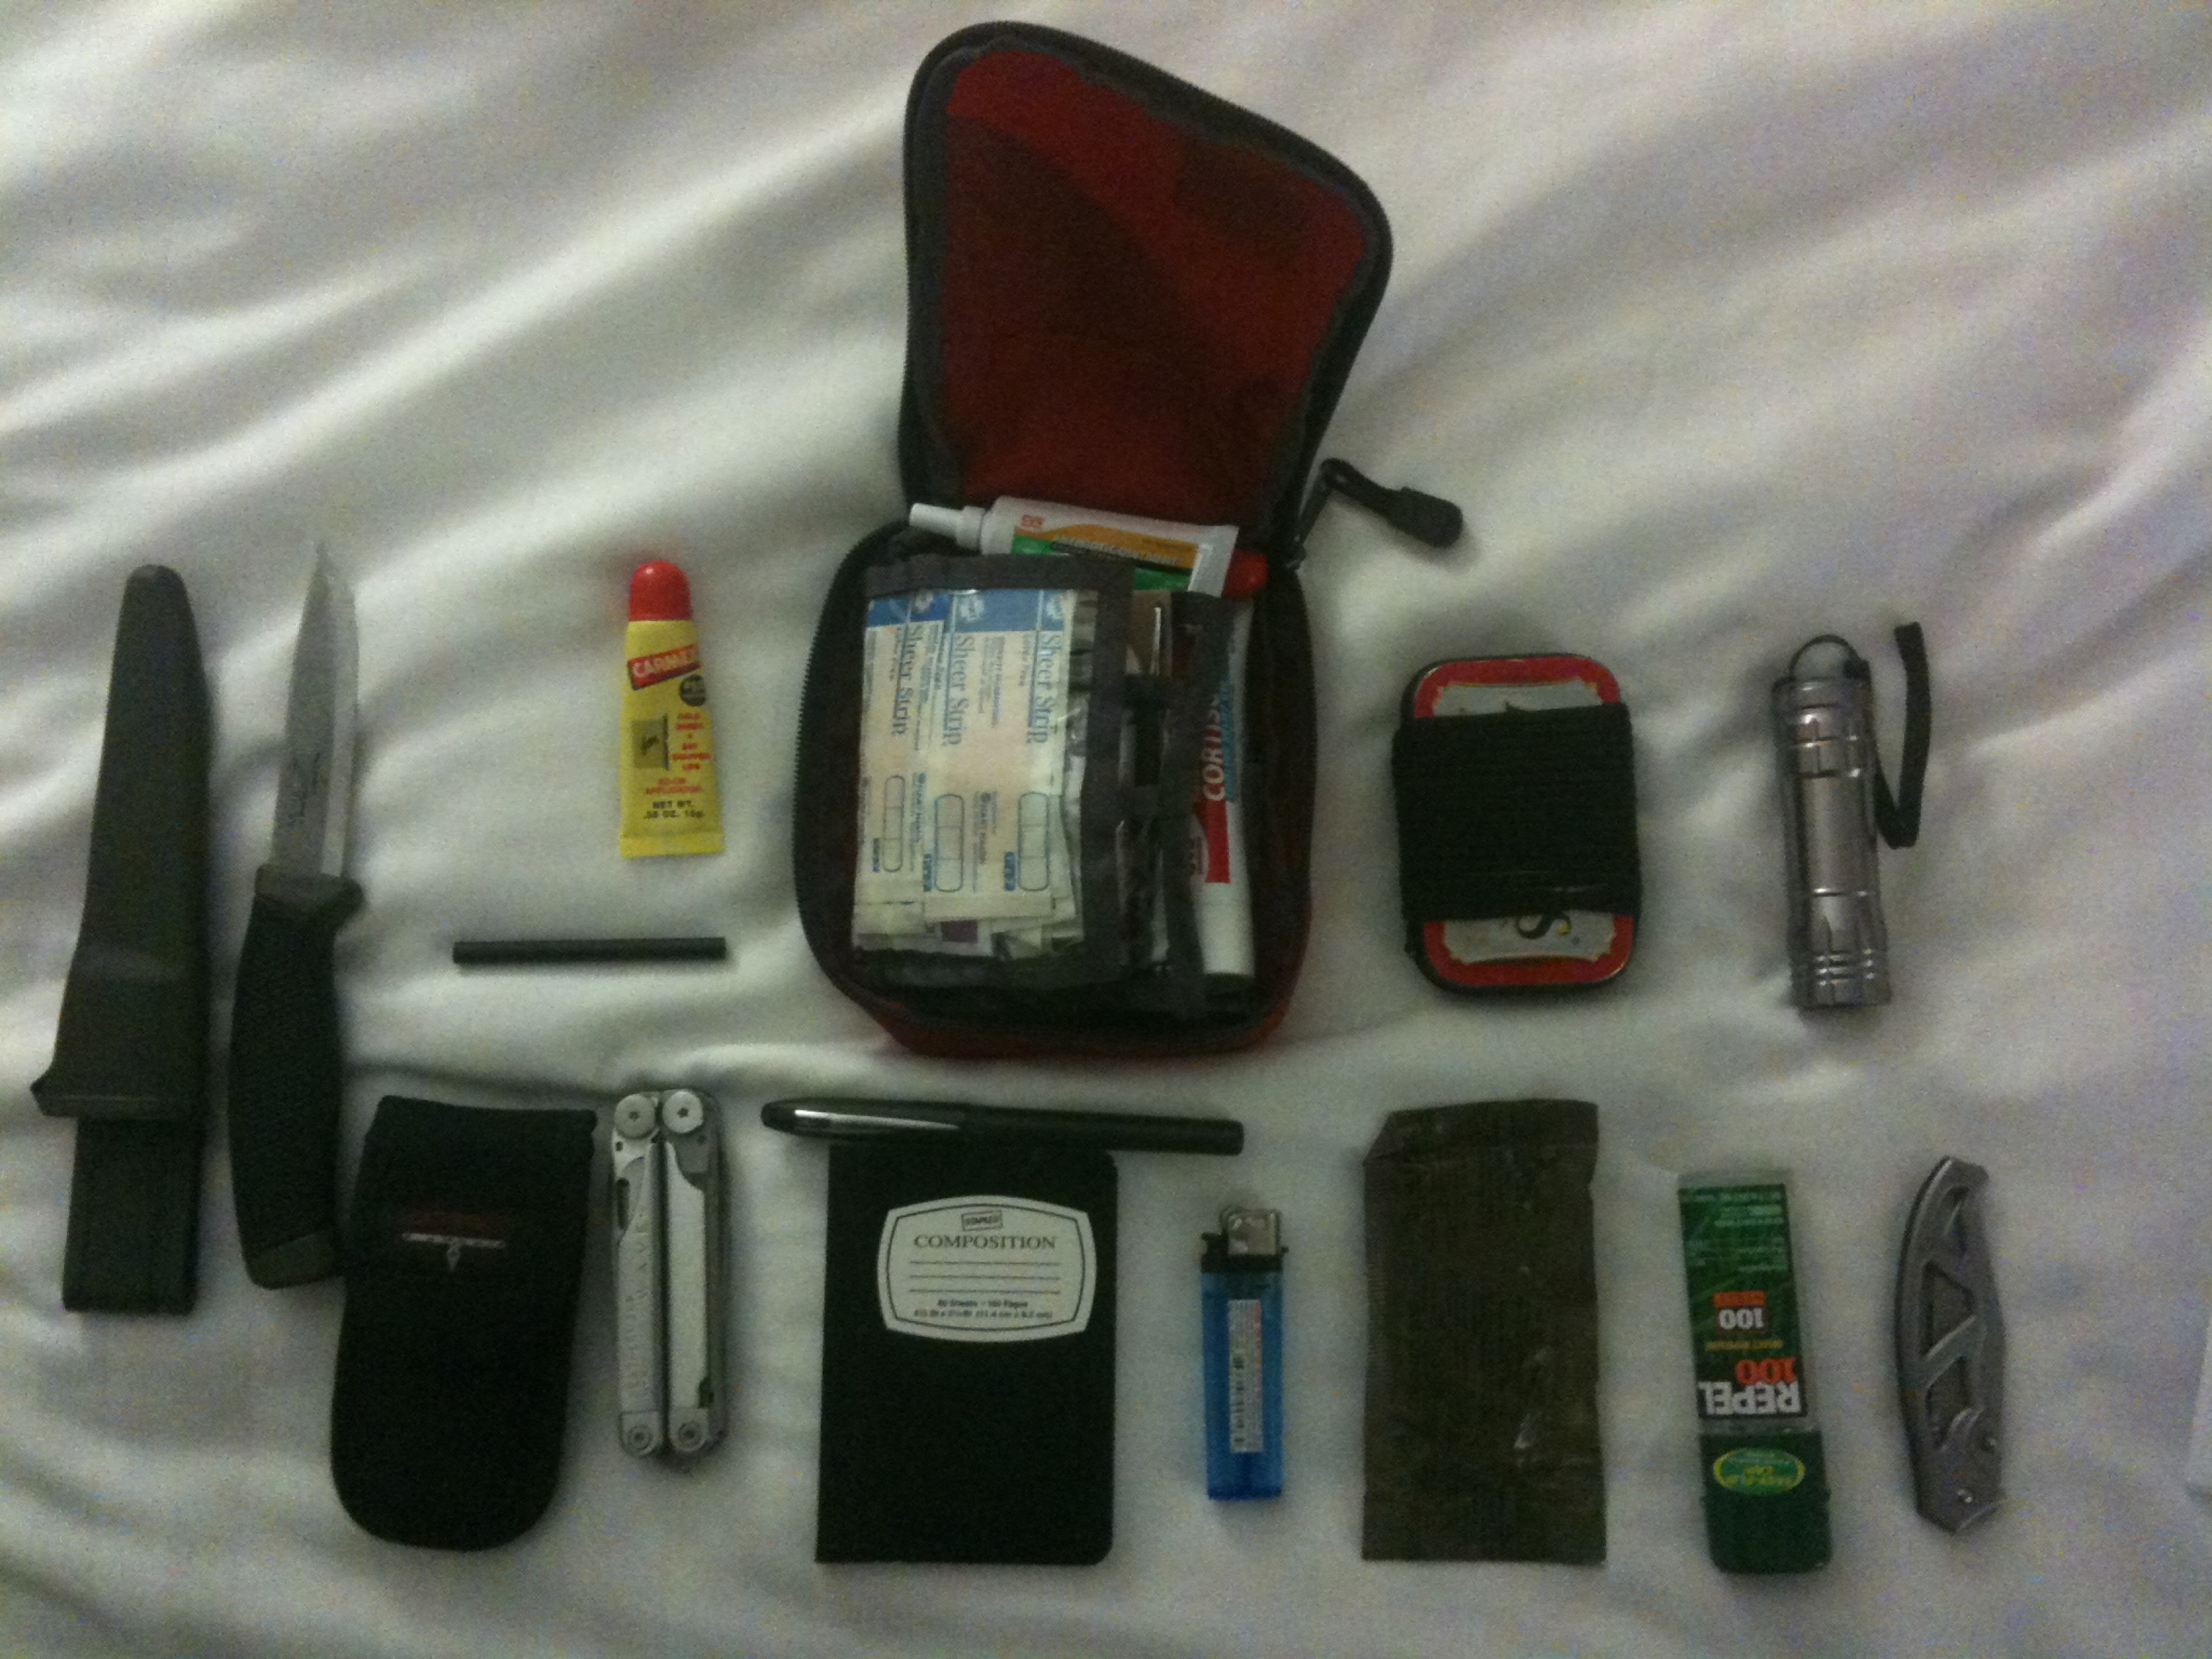 My Business Travel Preparedness Kit